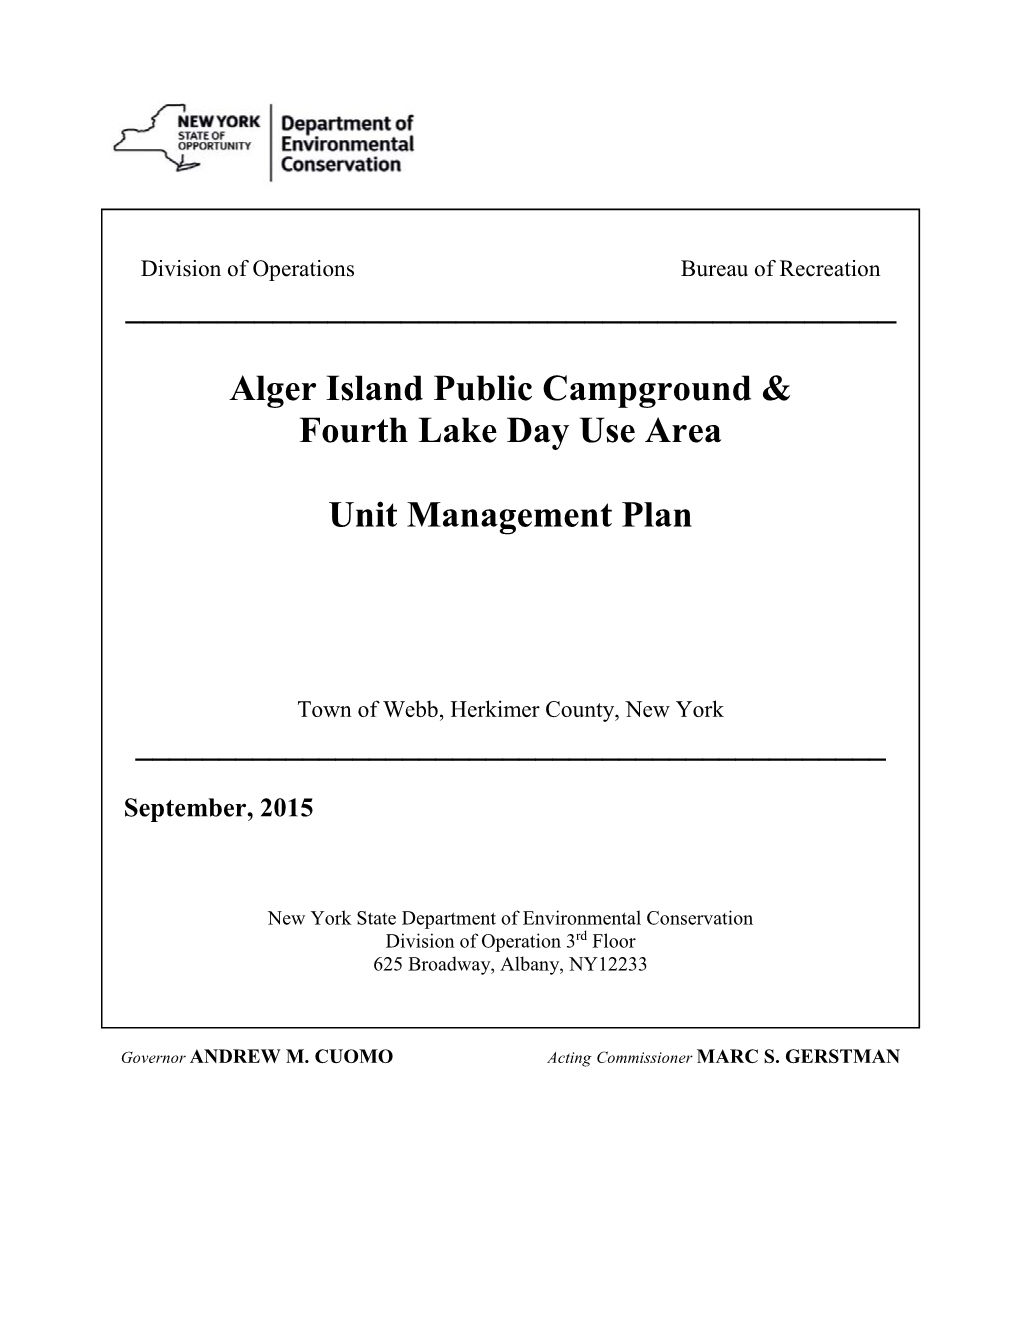 Alger Island Public Campground & Fourth Lake Day Use Area Unit Management Plan